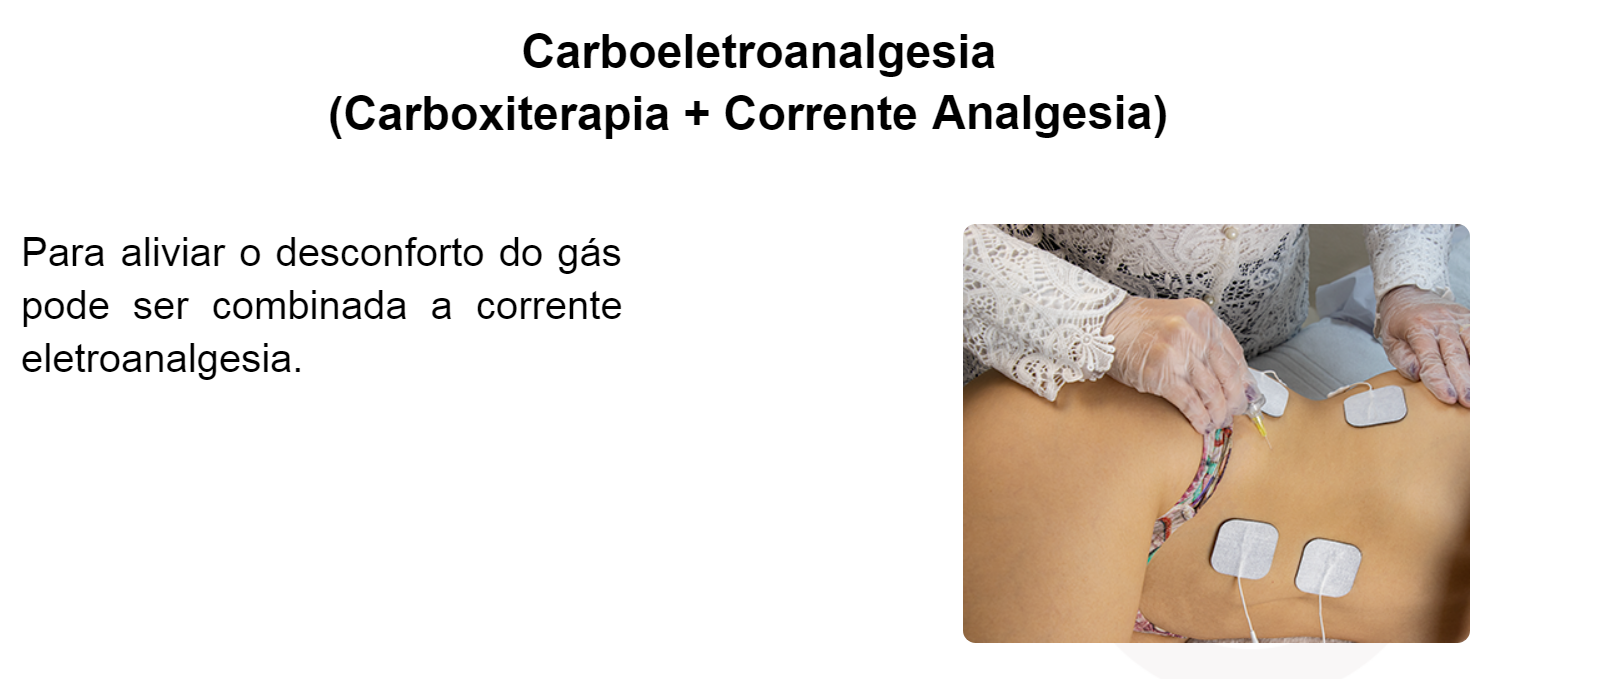 Carboeletroanalgesia